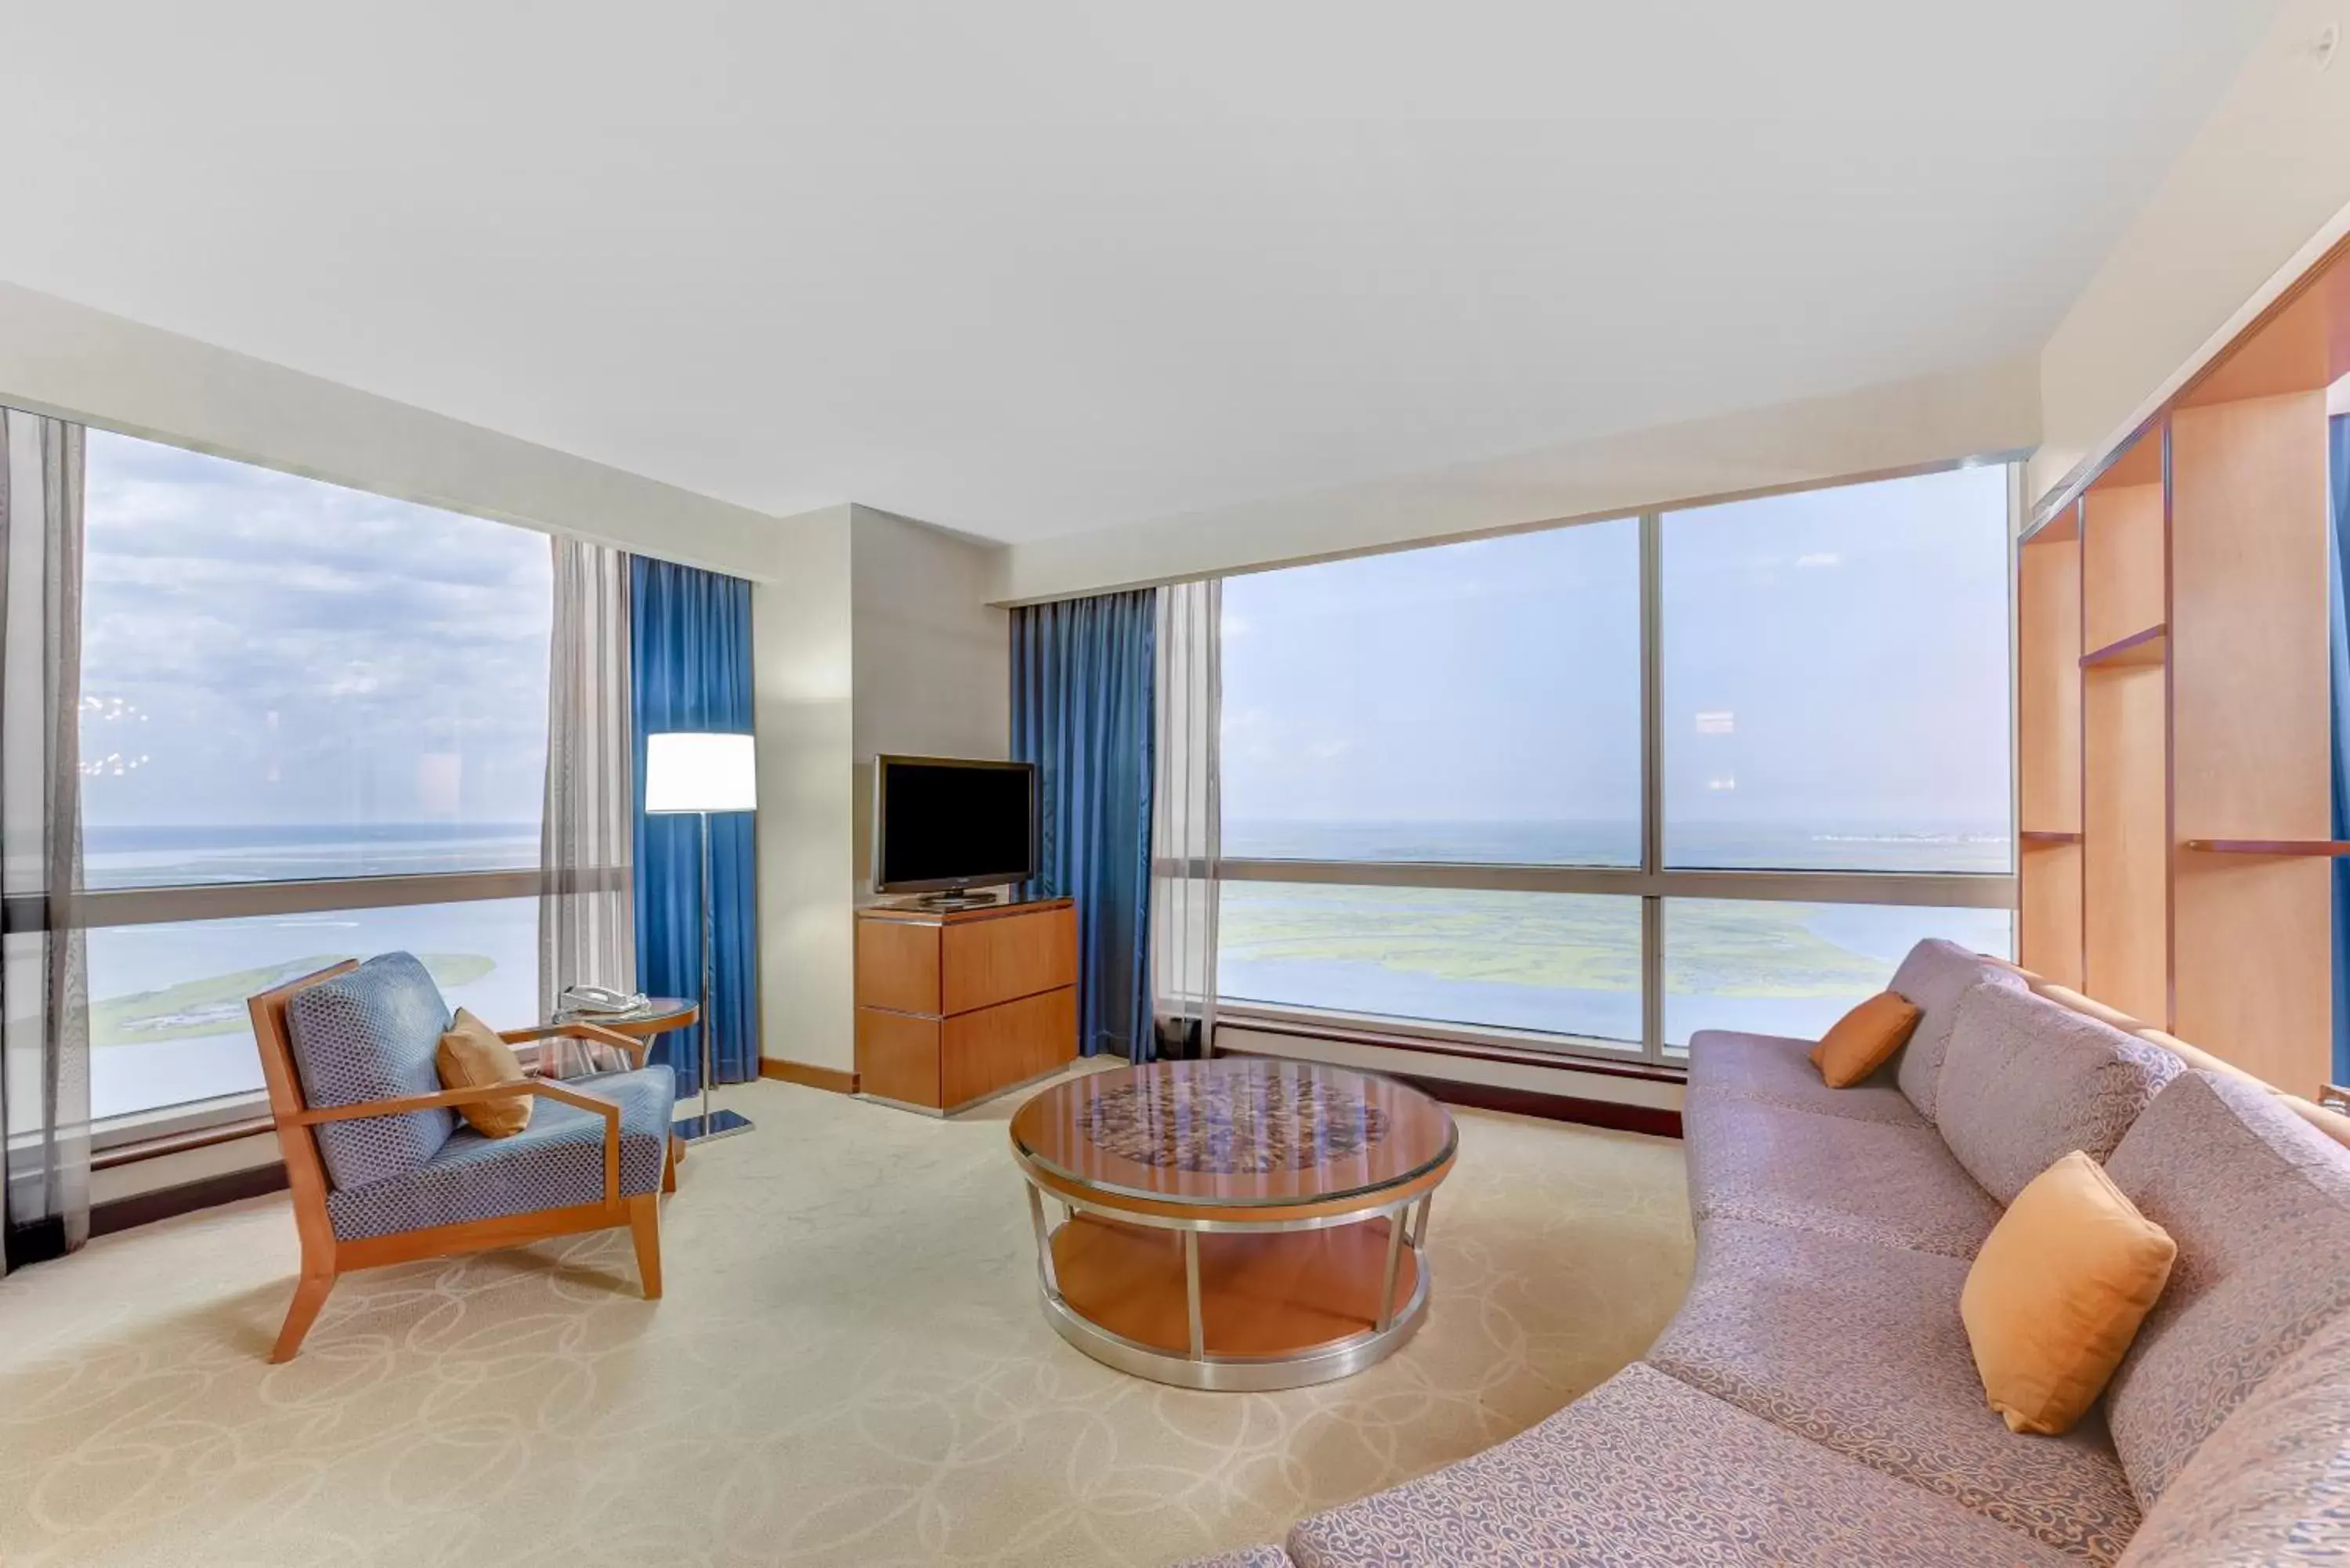 Seating Area in Harrah's Resort Atlantic City Hotel & Casino